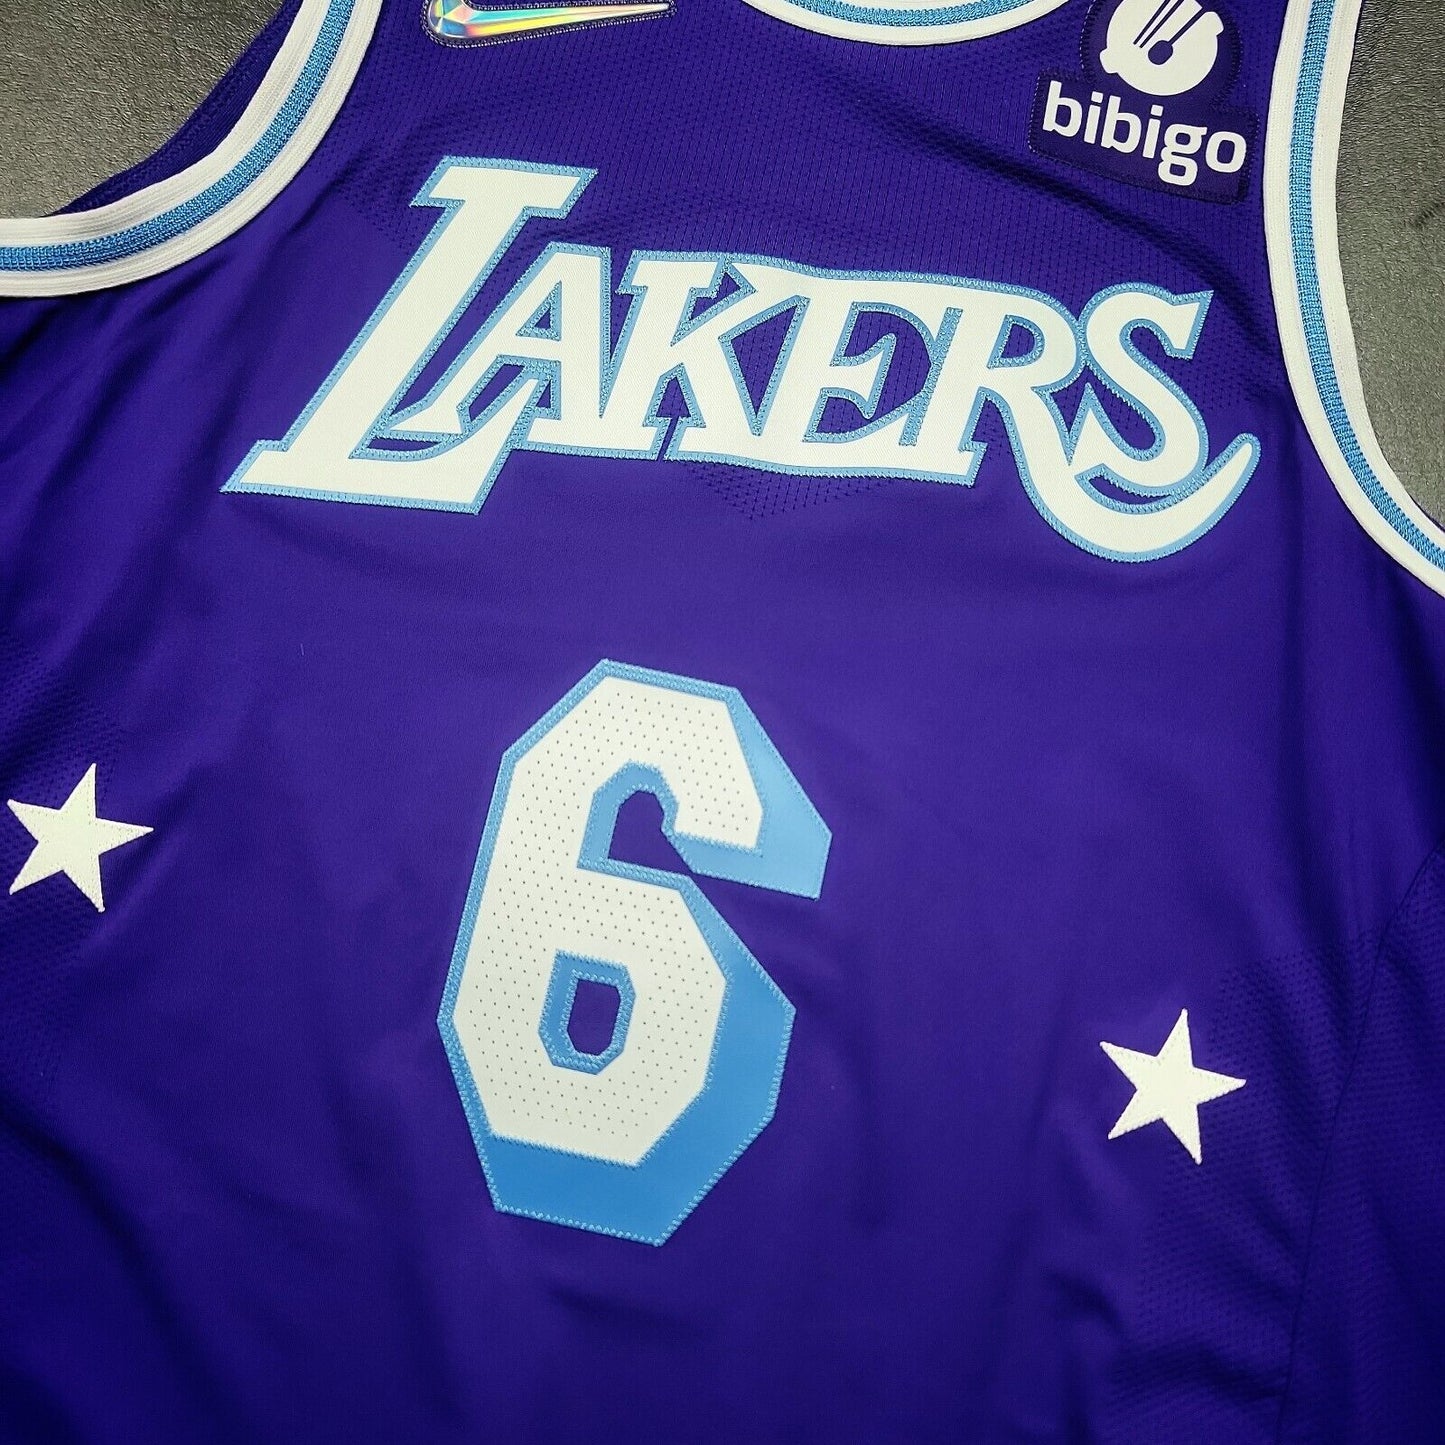 100% Authentic Lebron James Nike Lakers Mixtape City Jersey Size 44 M Bibigo